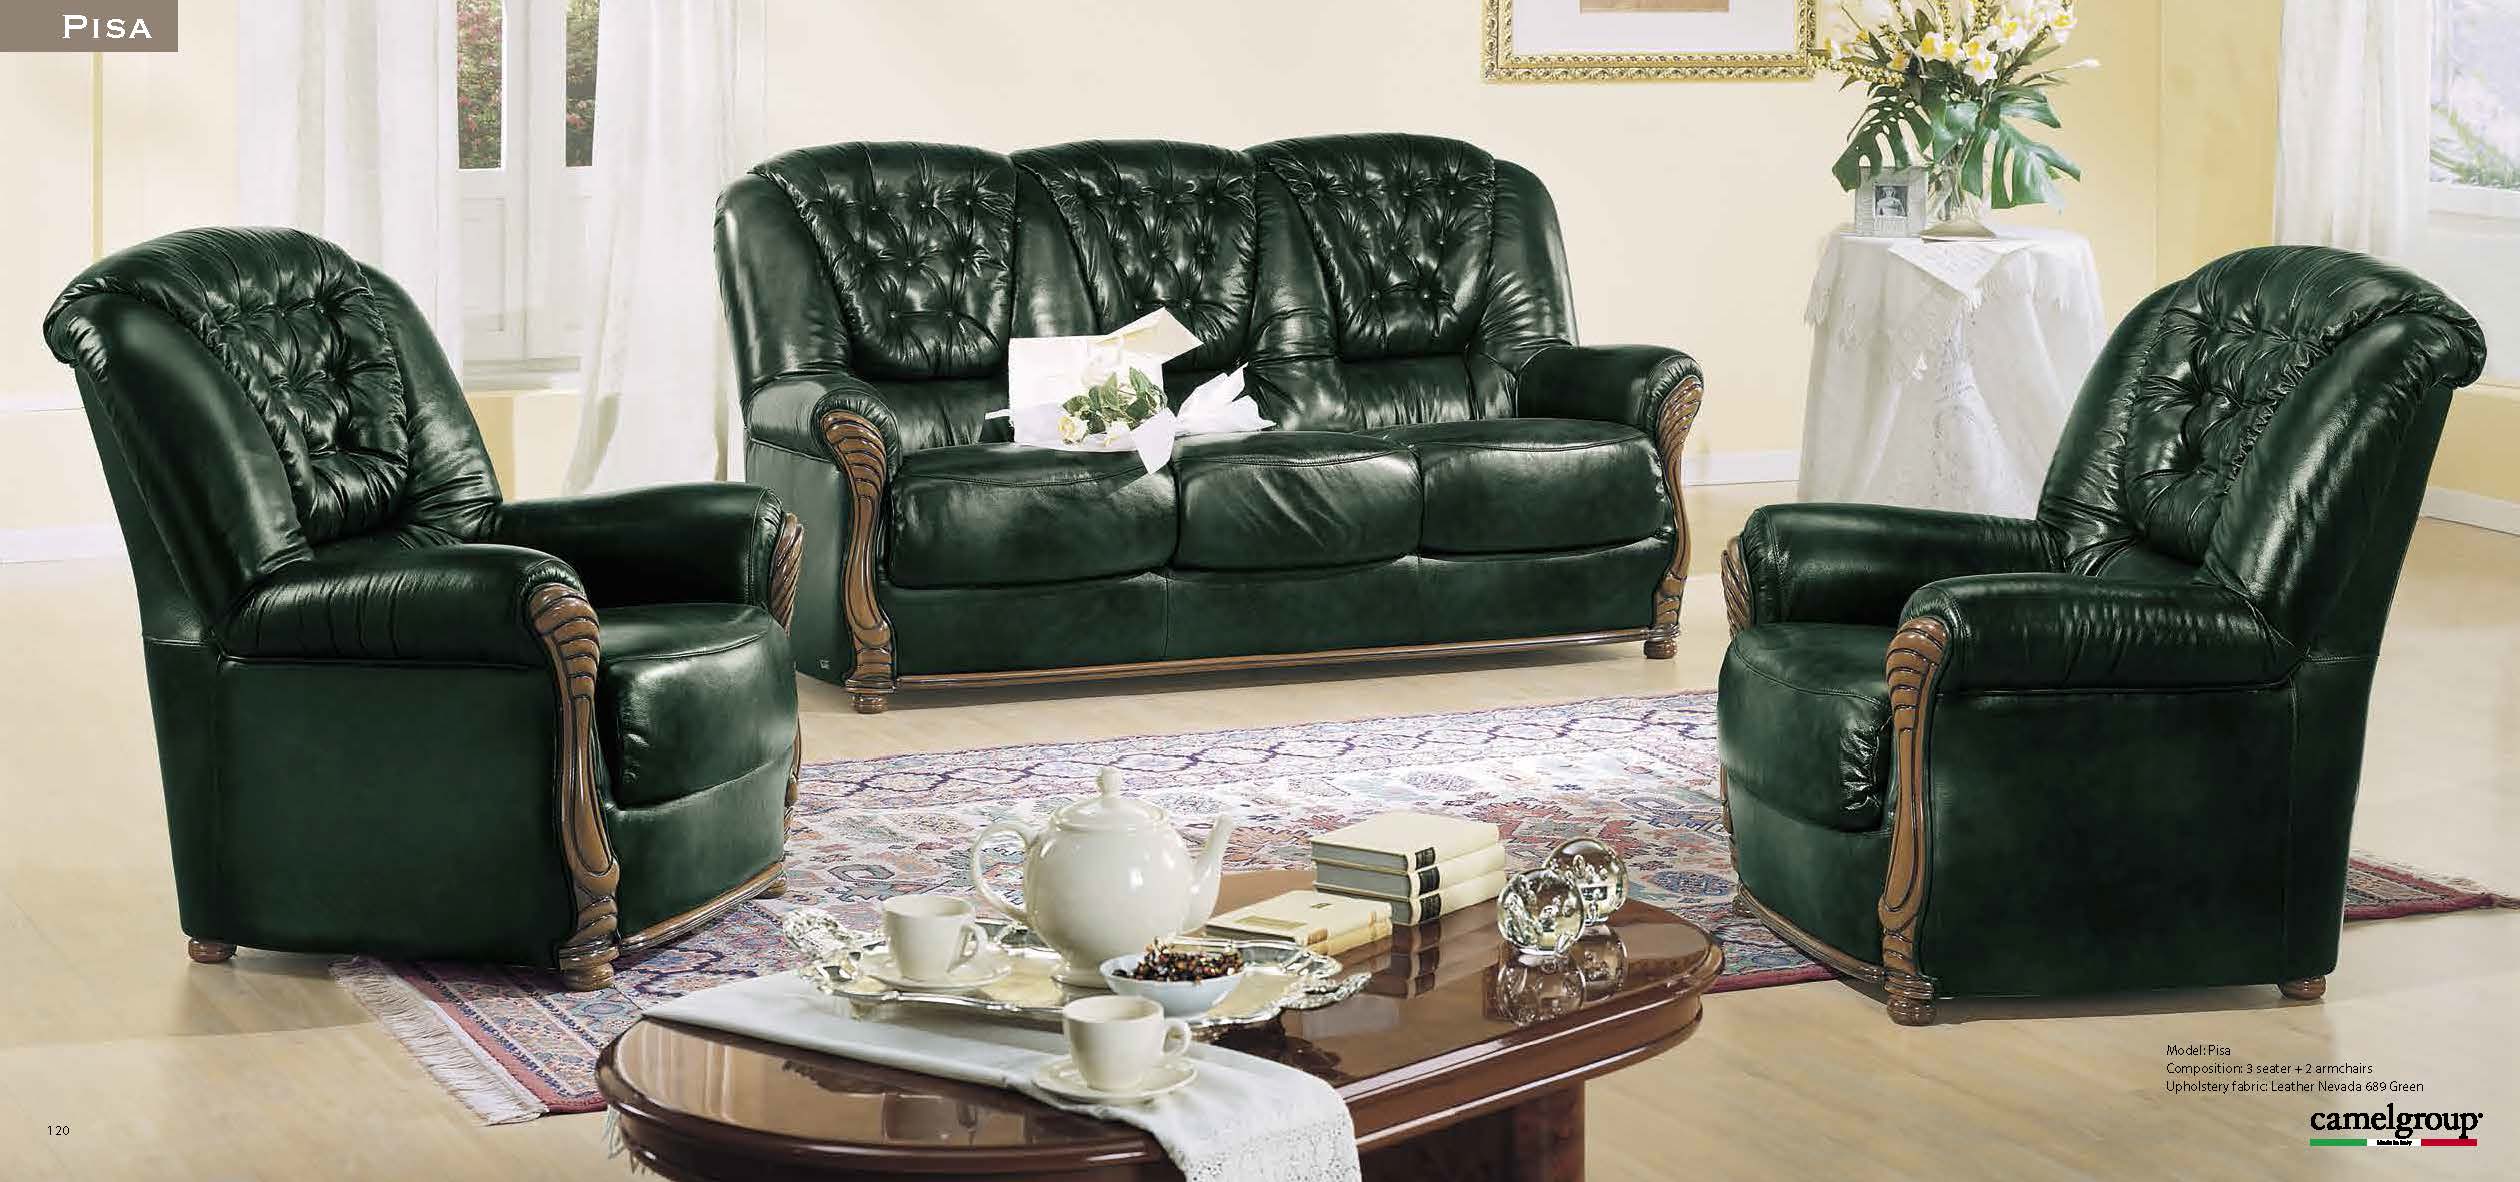 Living Room Furniture Sectionals Pisa Living